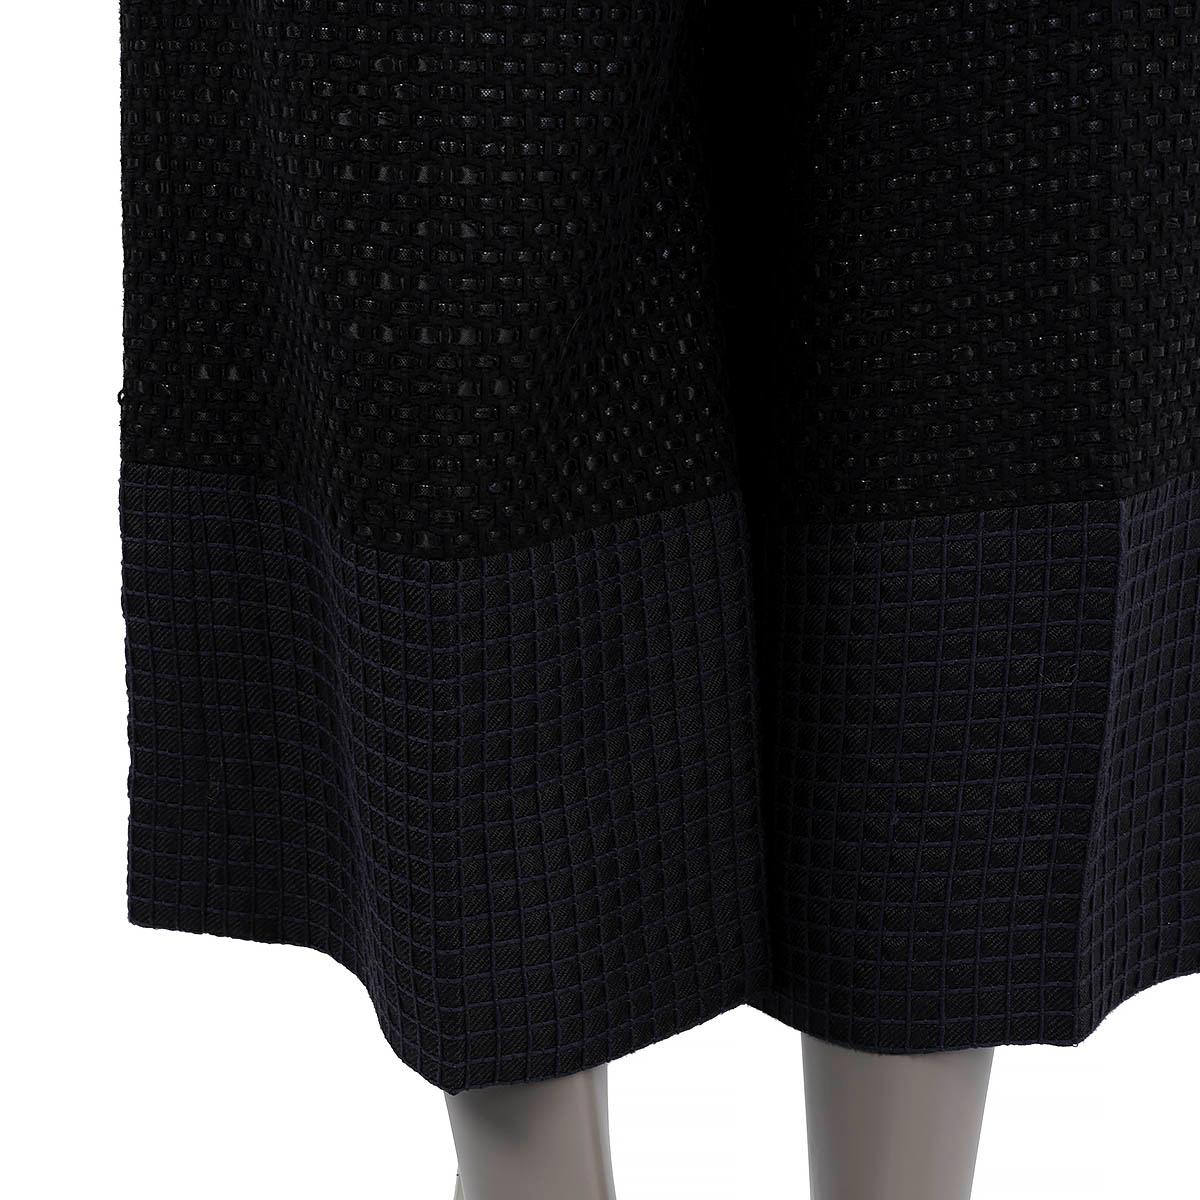 CHANEL black cotton 2016 16C SEOUL DOUBLE BREASTED PANT Suit 38 S 6